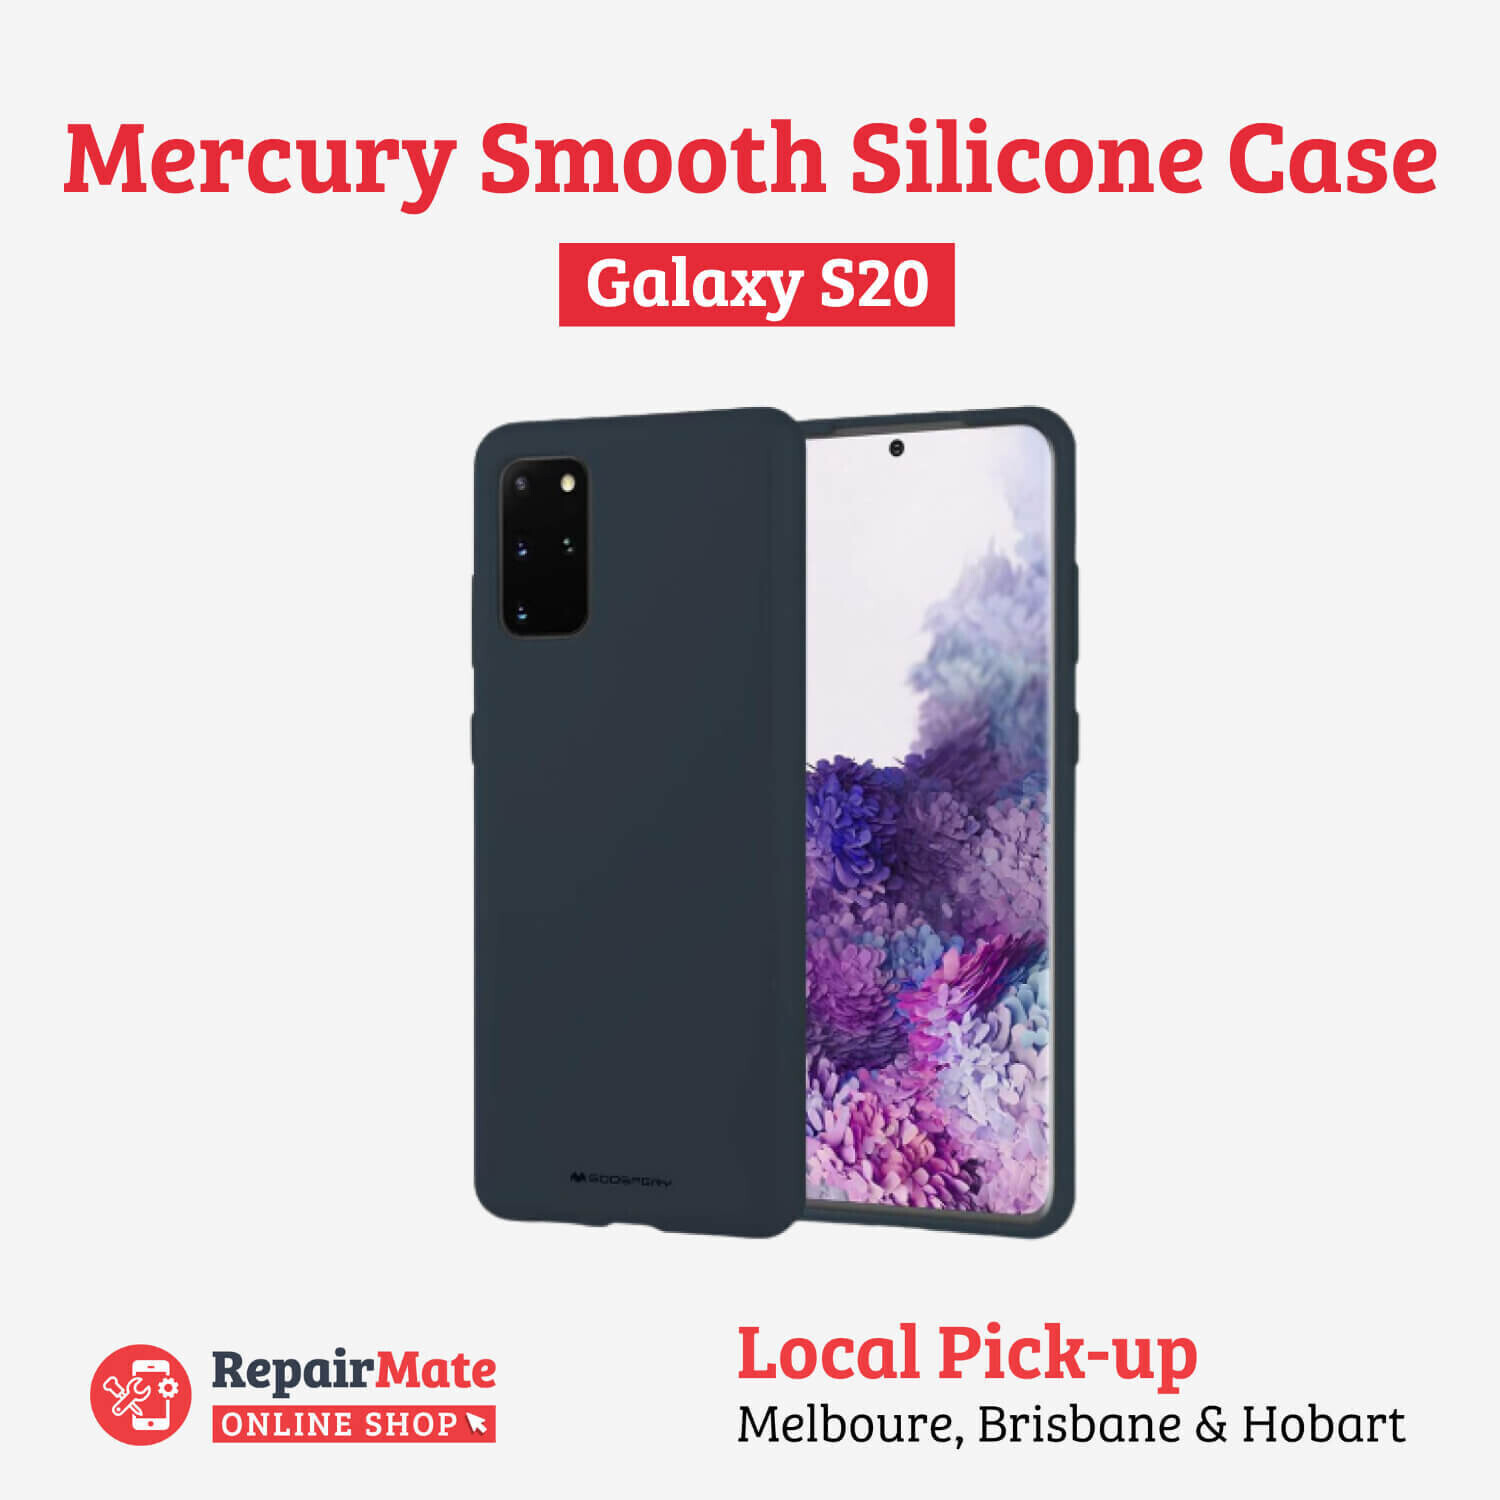 Samsung Galaxy S20 Mercury Smooth Silicone Case